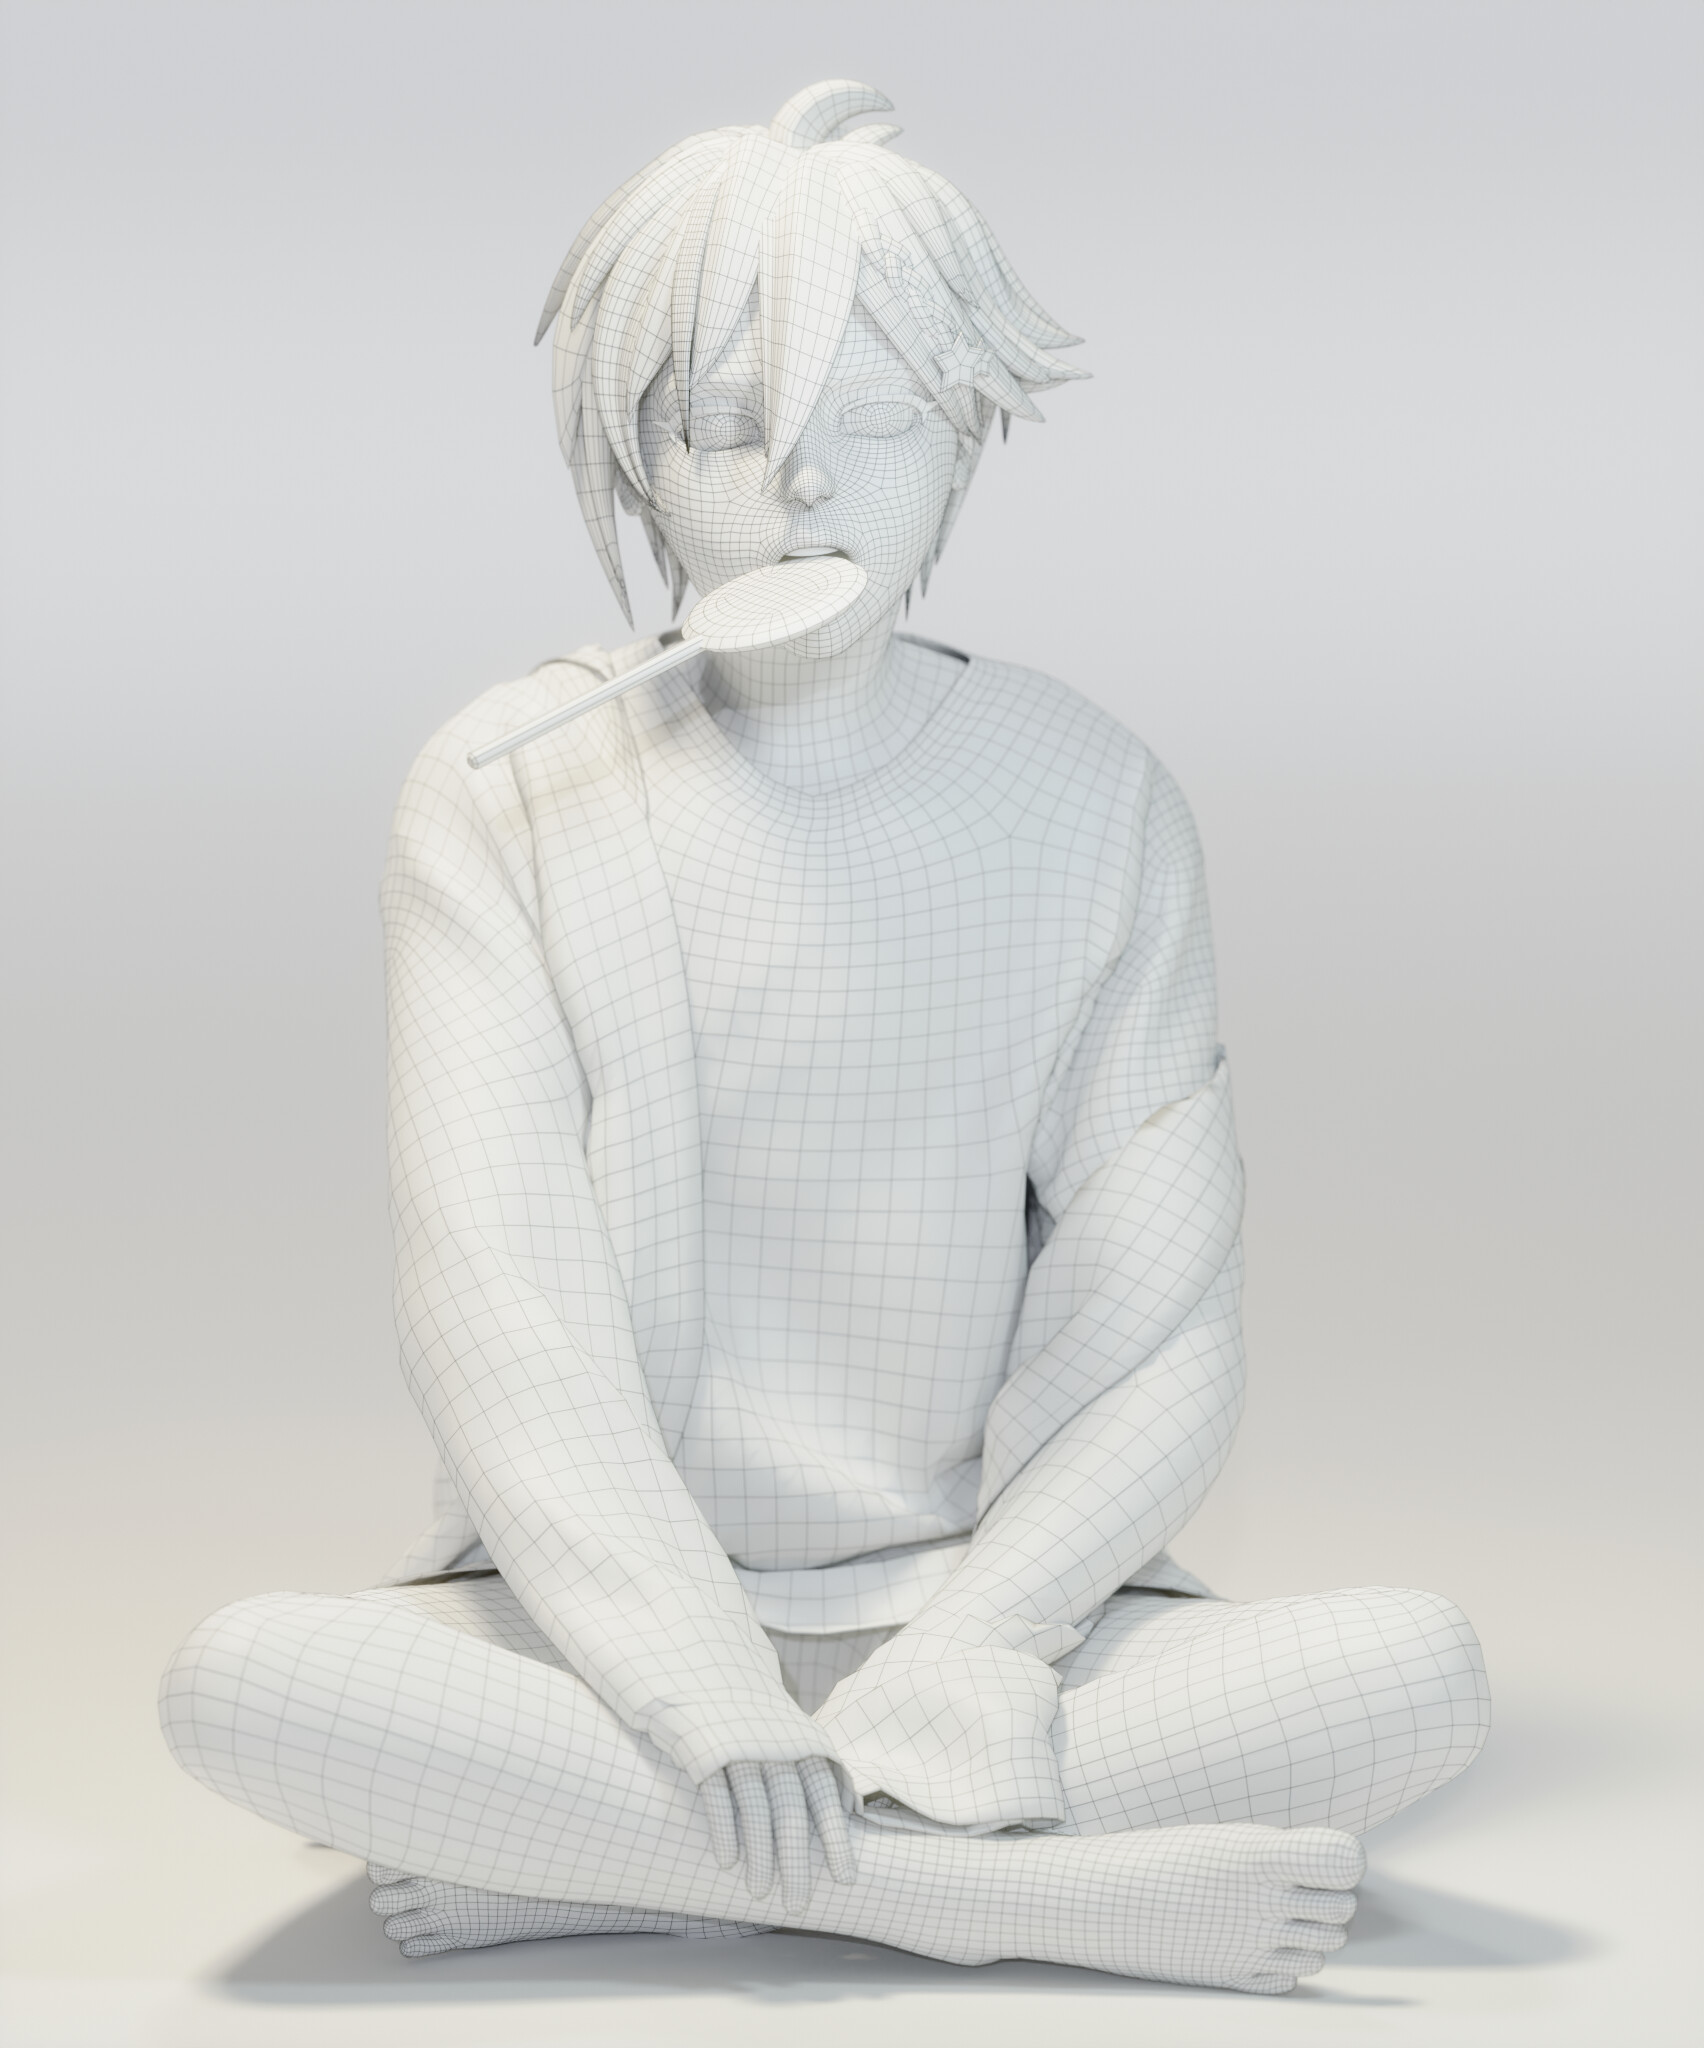 white haired anime boy render